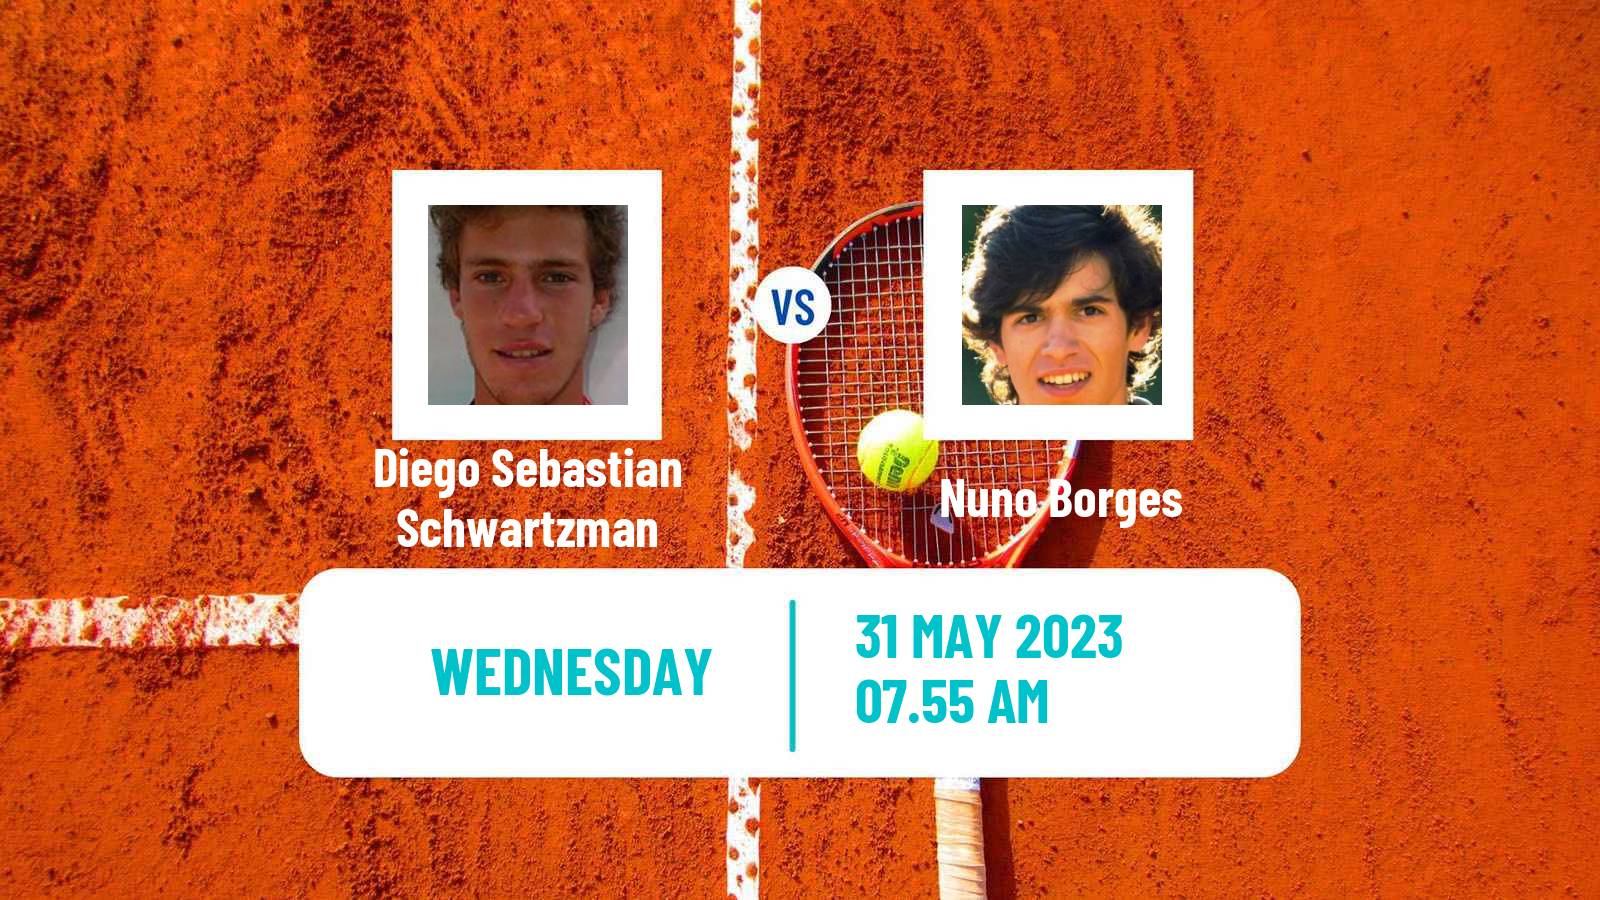 Tennis ATP Roland Garros Diego Sebastian Schwartzman - Nuno Borges